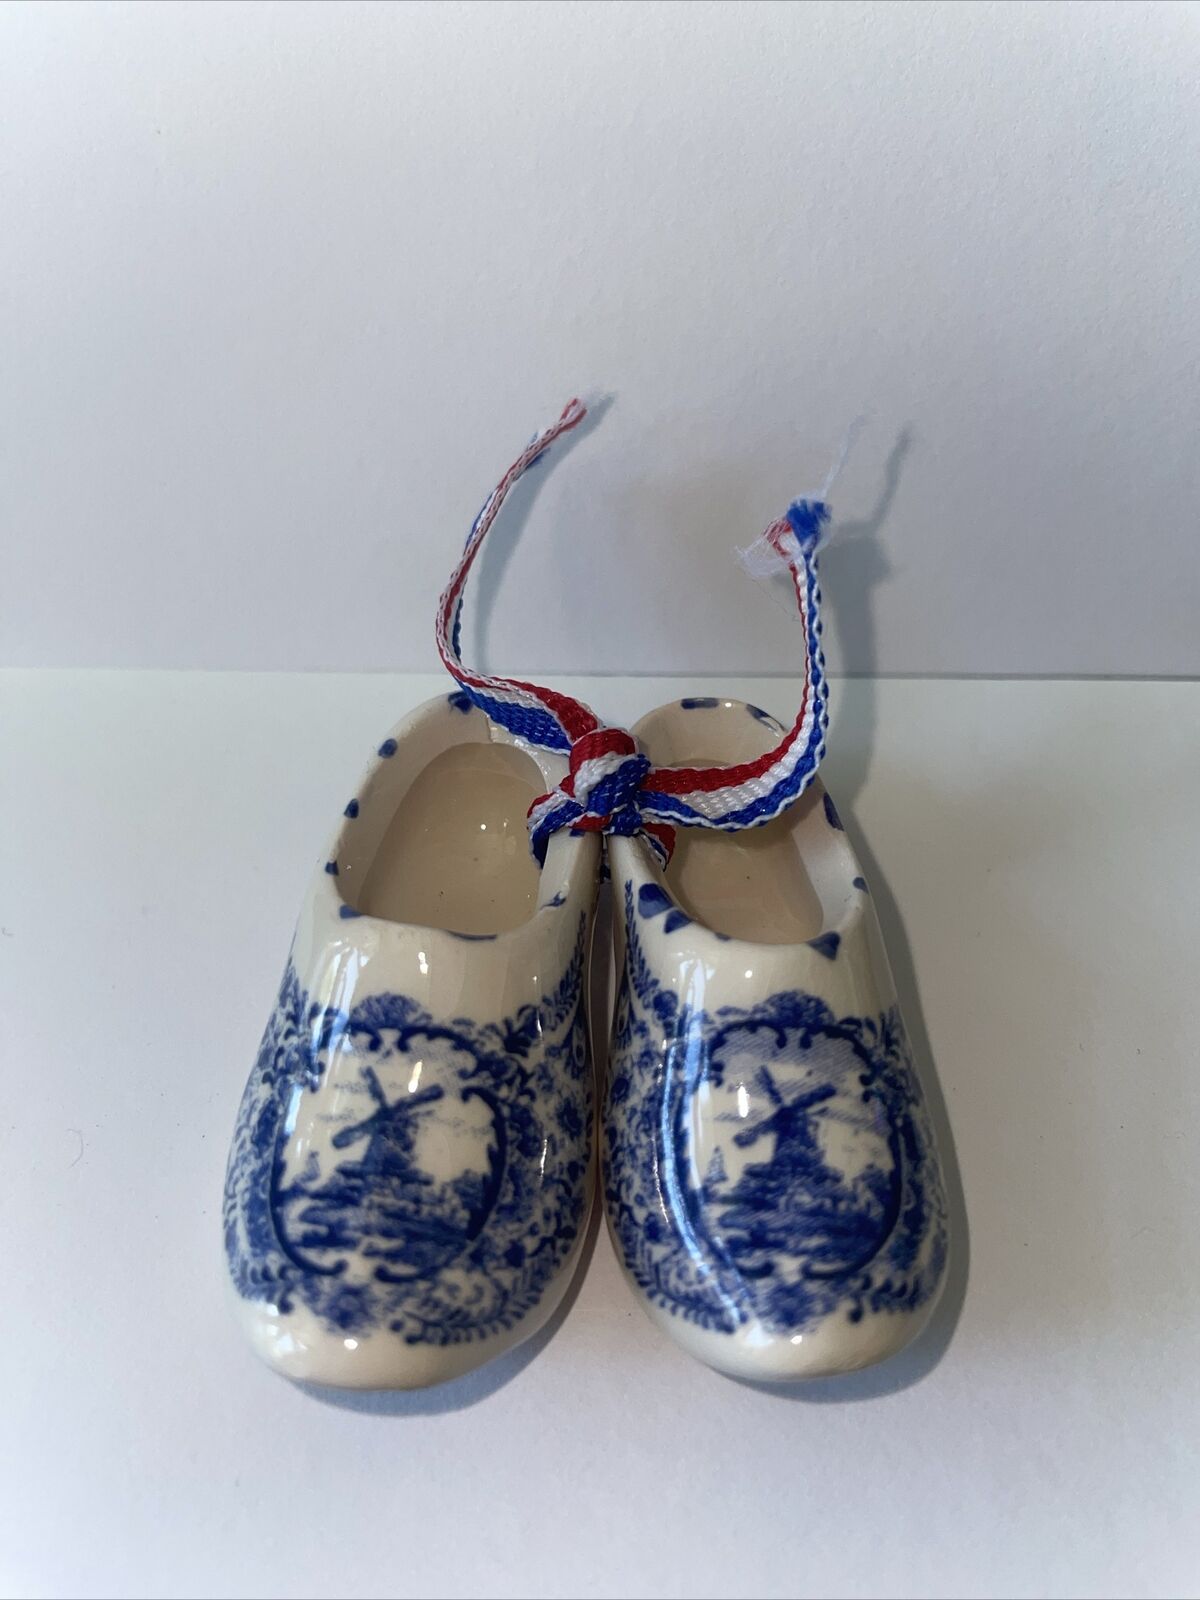 Collectible Vintage Handmade Delft Blue & White 2” Ceramic Dutch Clogs